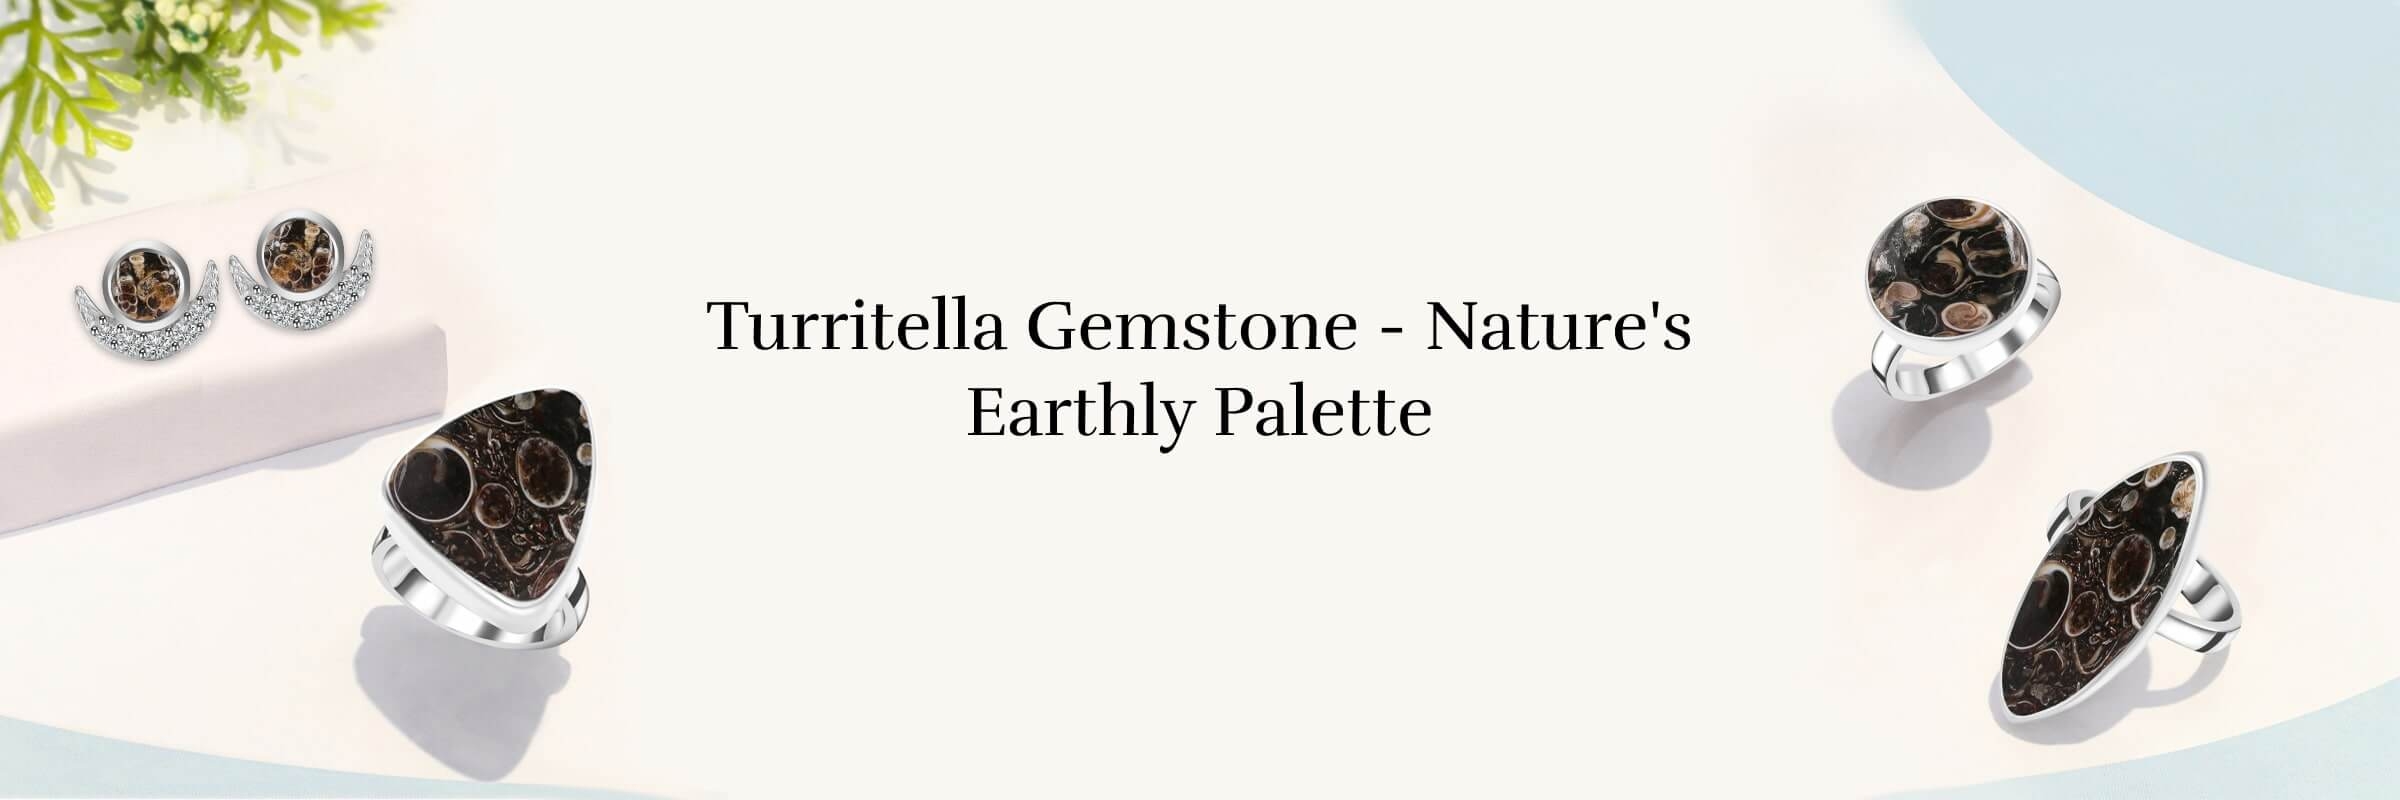 Physical Properties of Turritella Gemstone